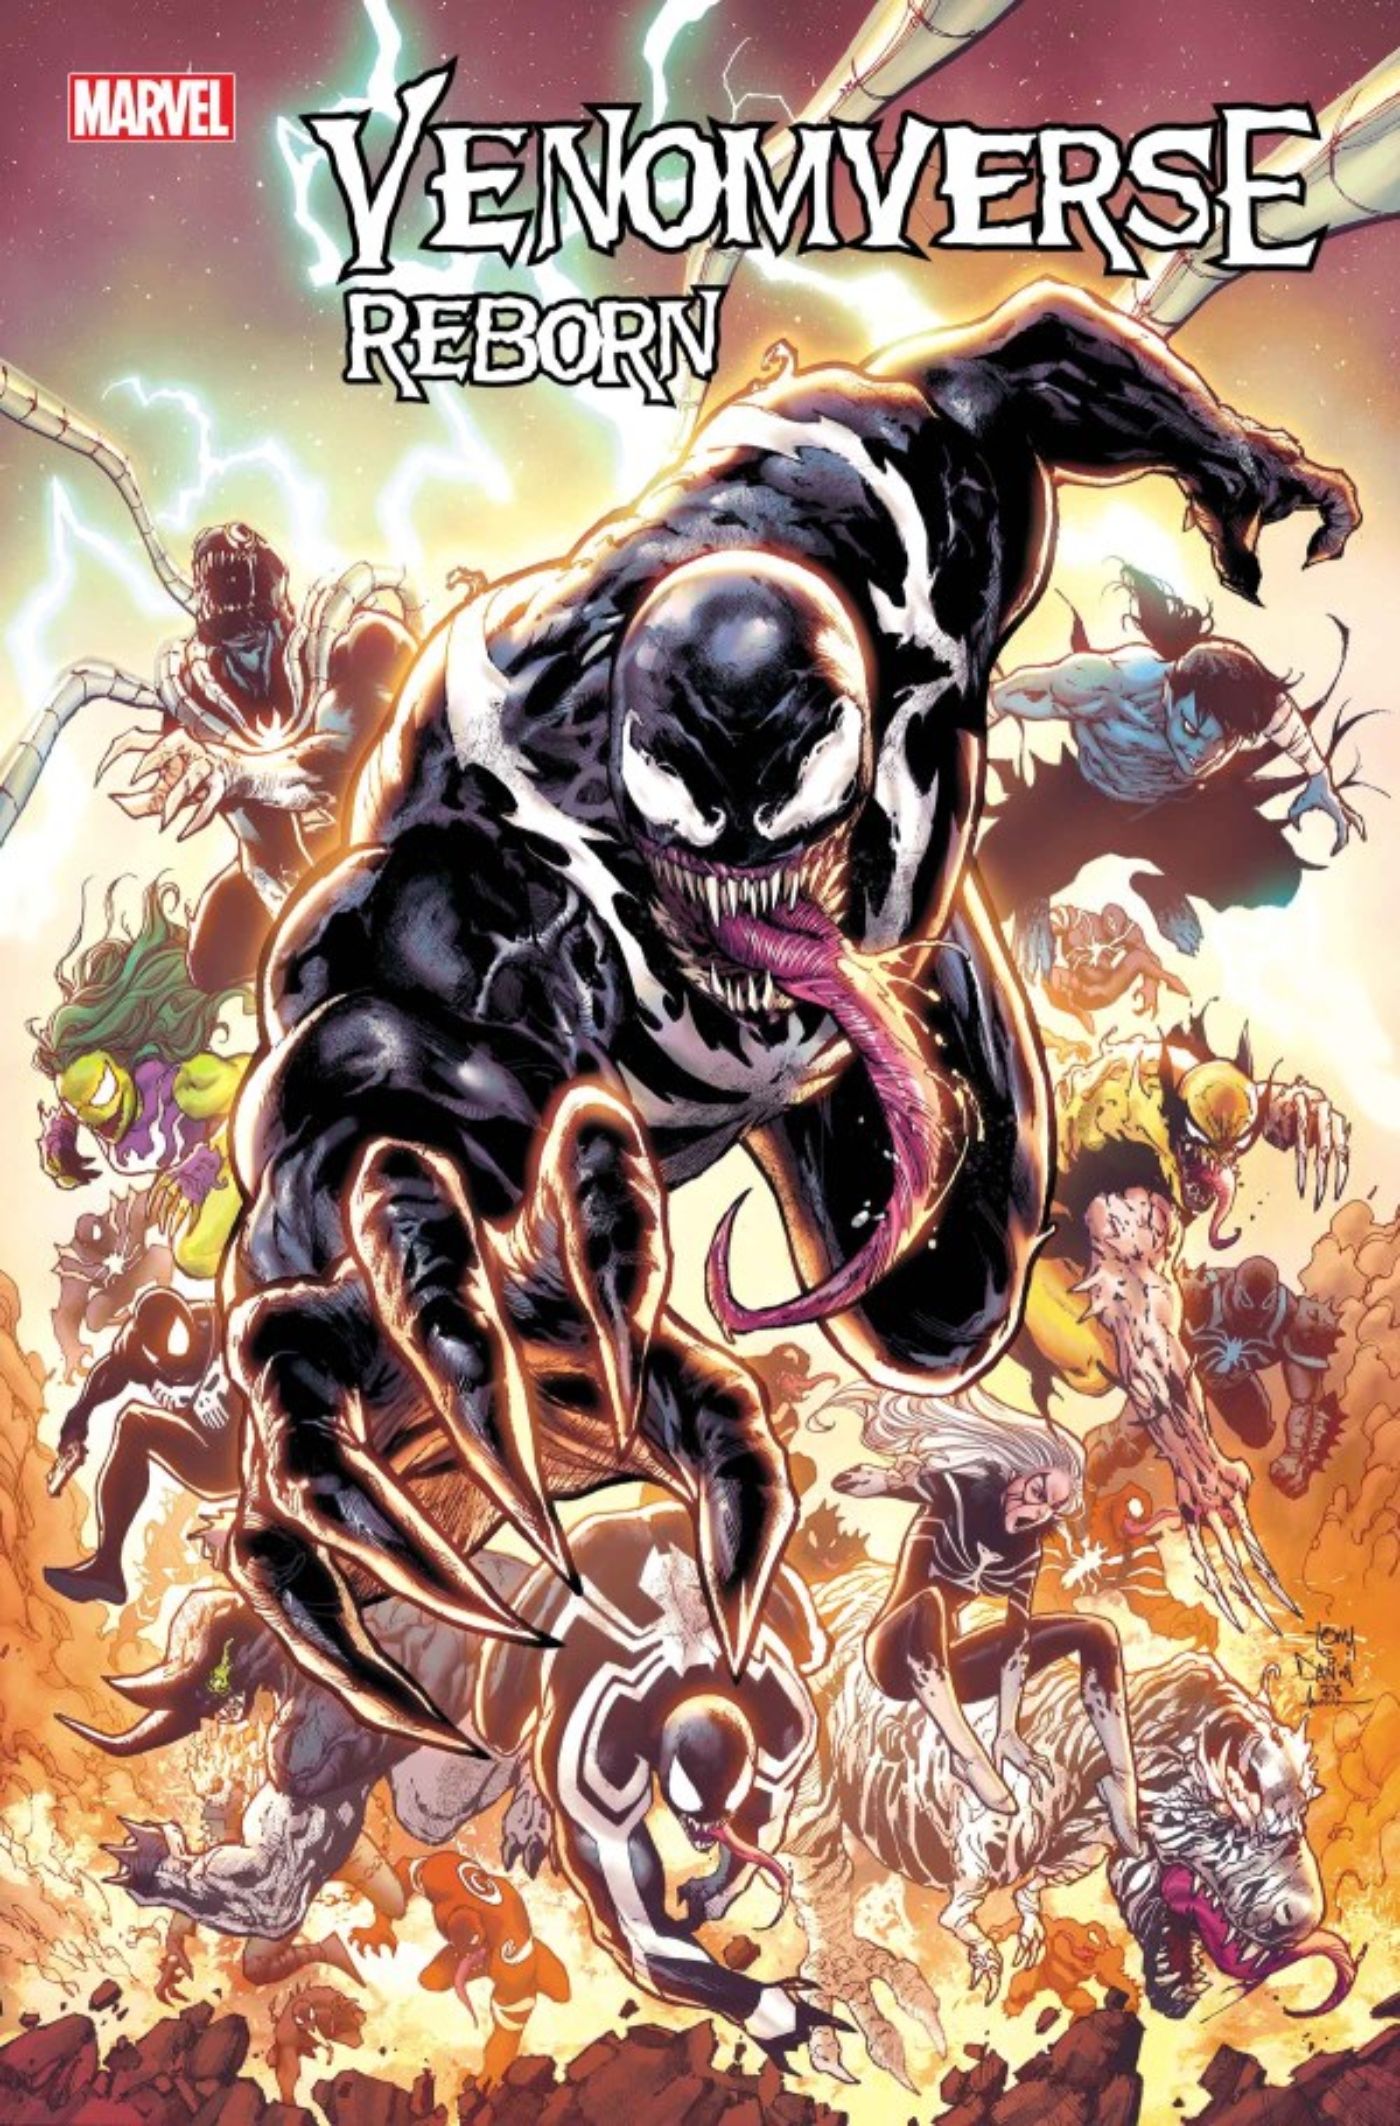 Capa de Venomverse Reborn #1 apresentando múltiplas versões de Venom de todo o multiverso.